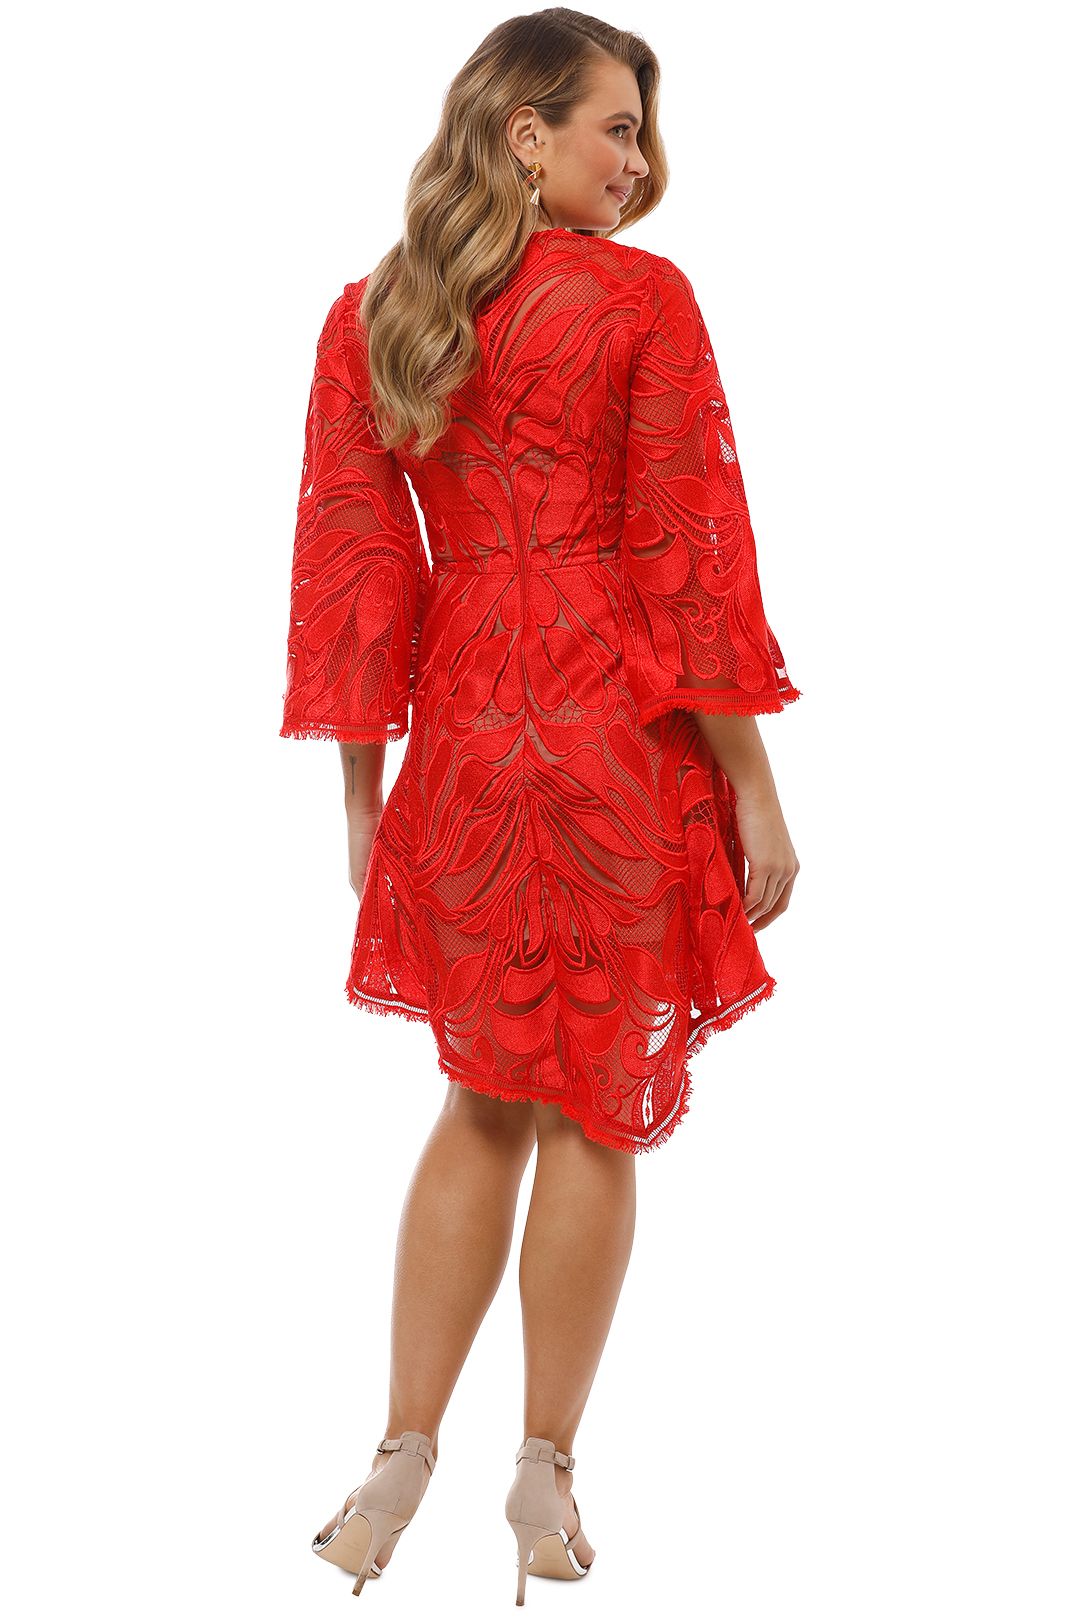 Talulah - Carnation Flared Sleeve Mini Dress - Red - Back